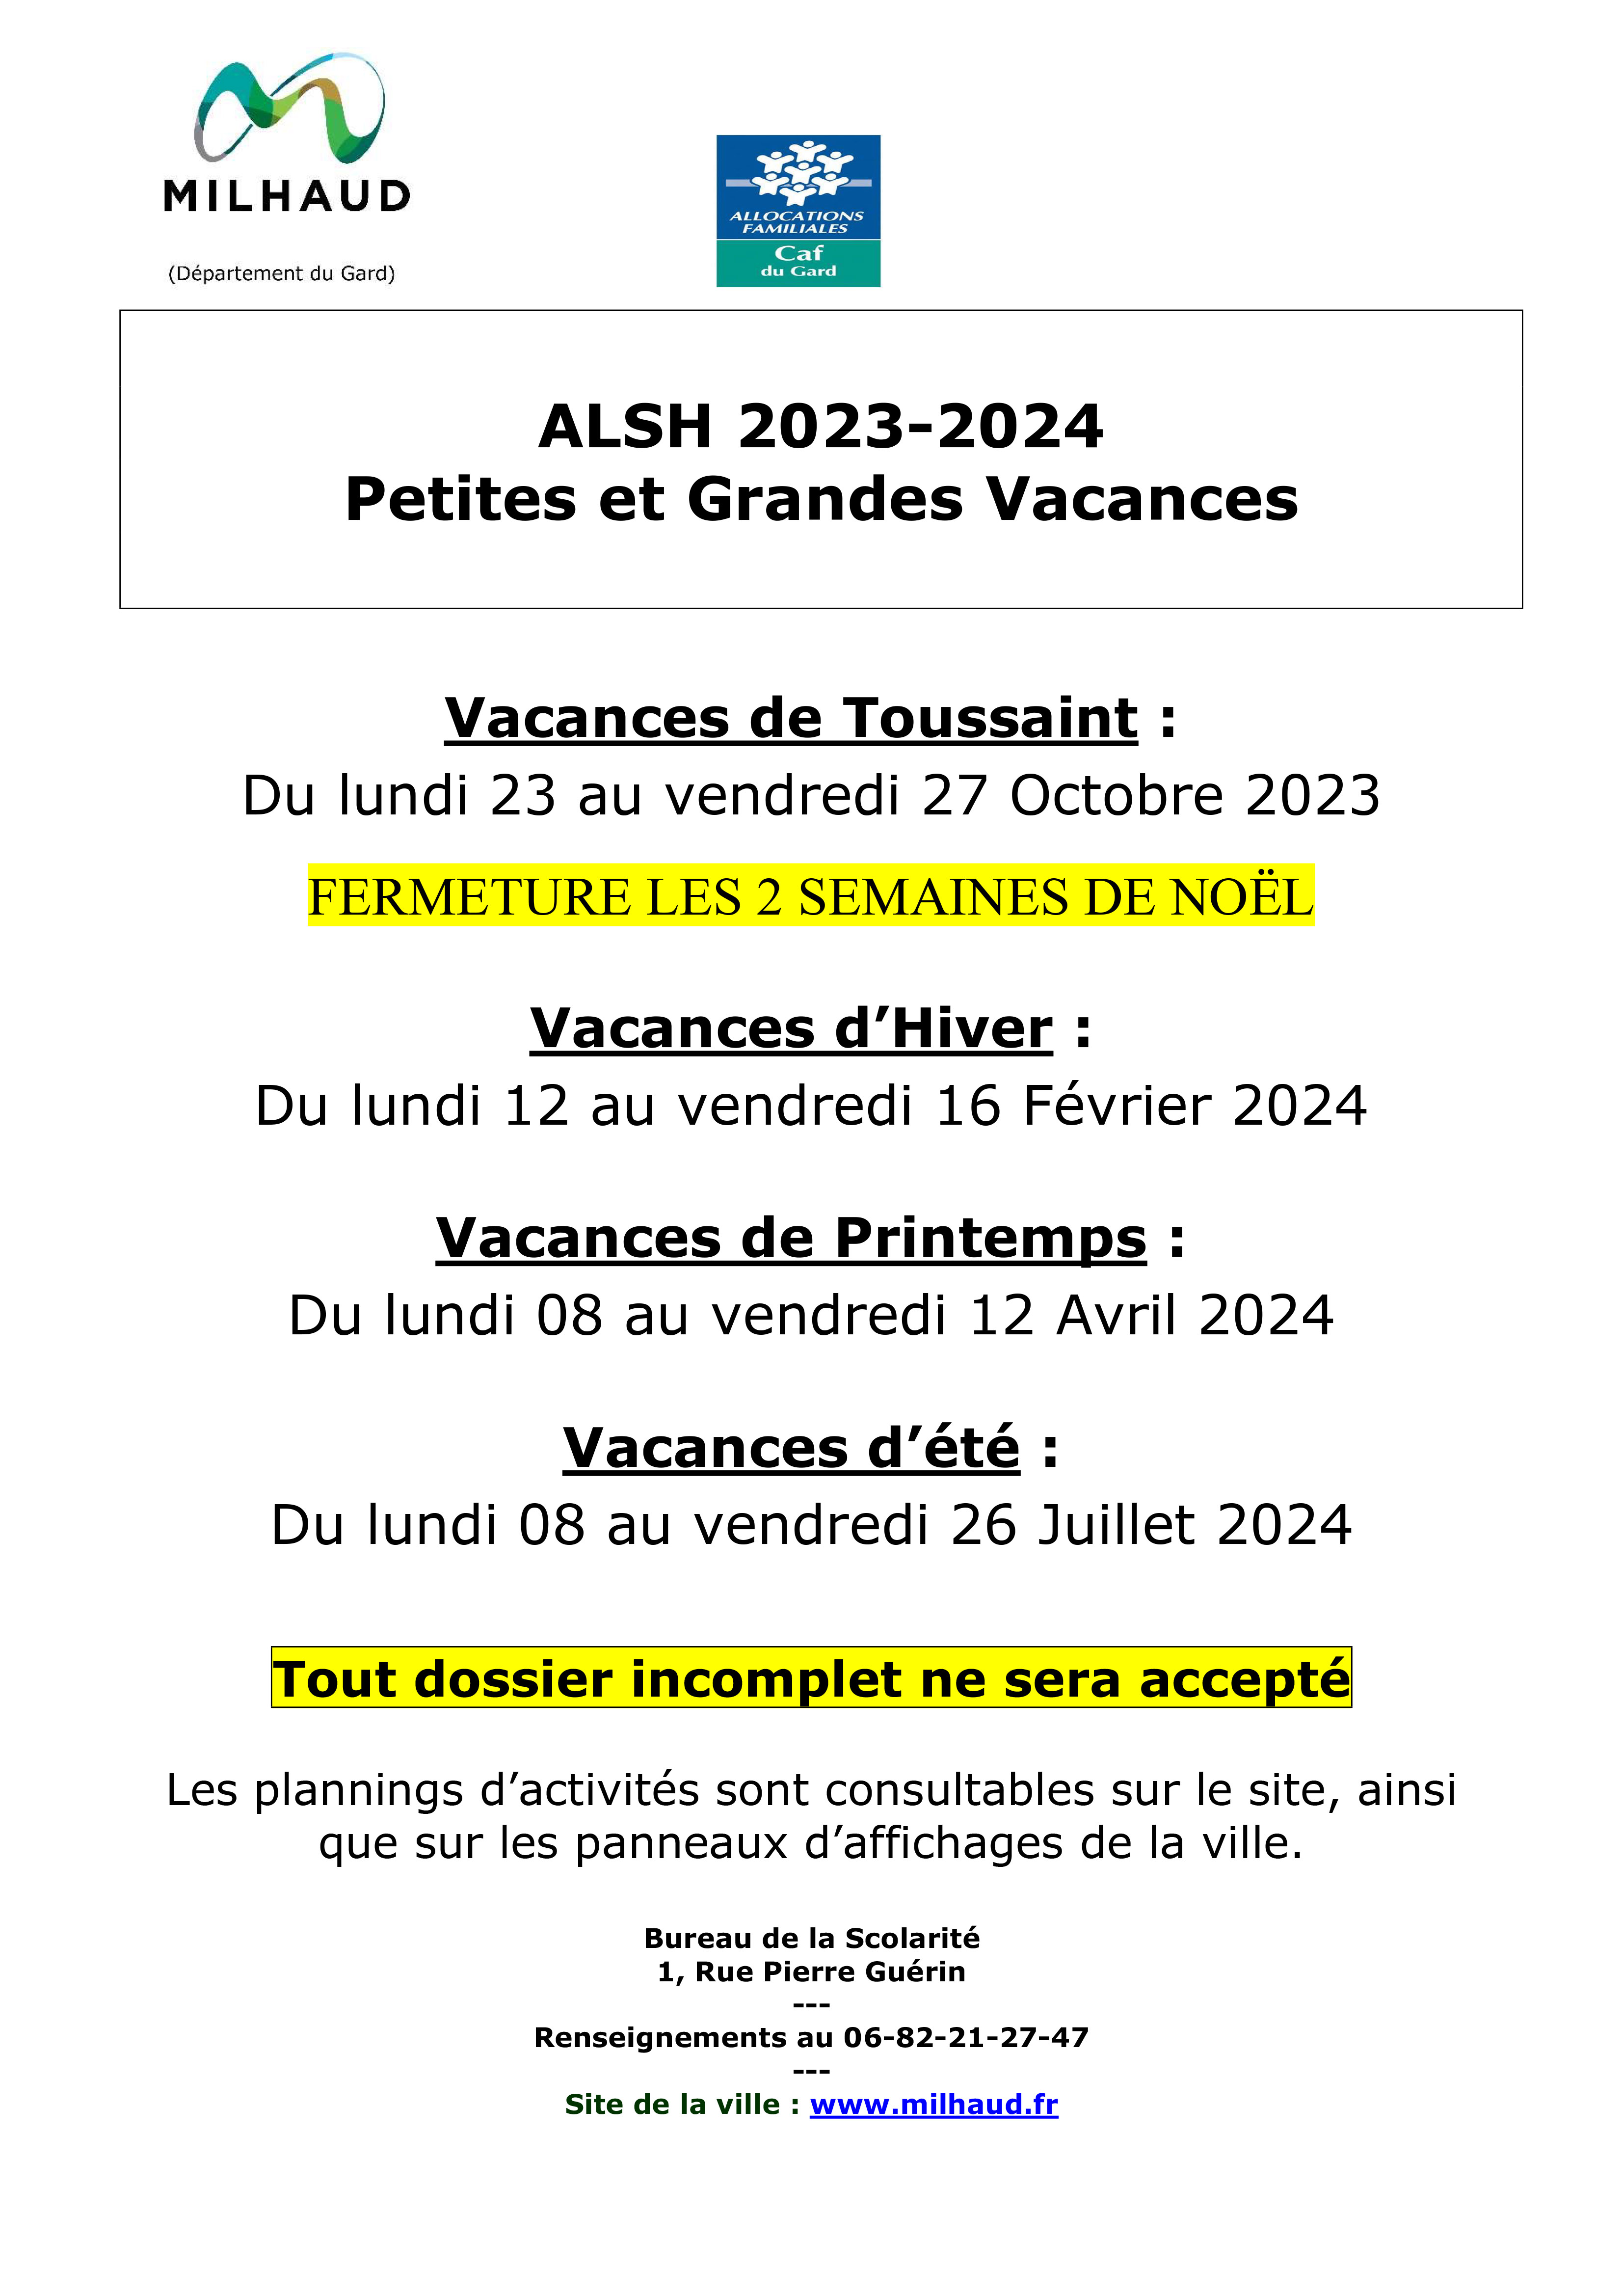 ALSH PLANNING VACANCES 2023 2024